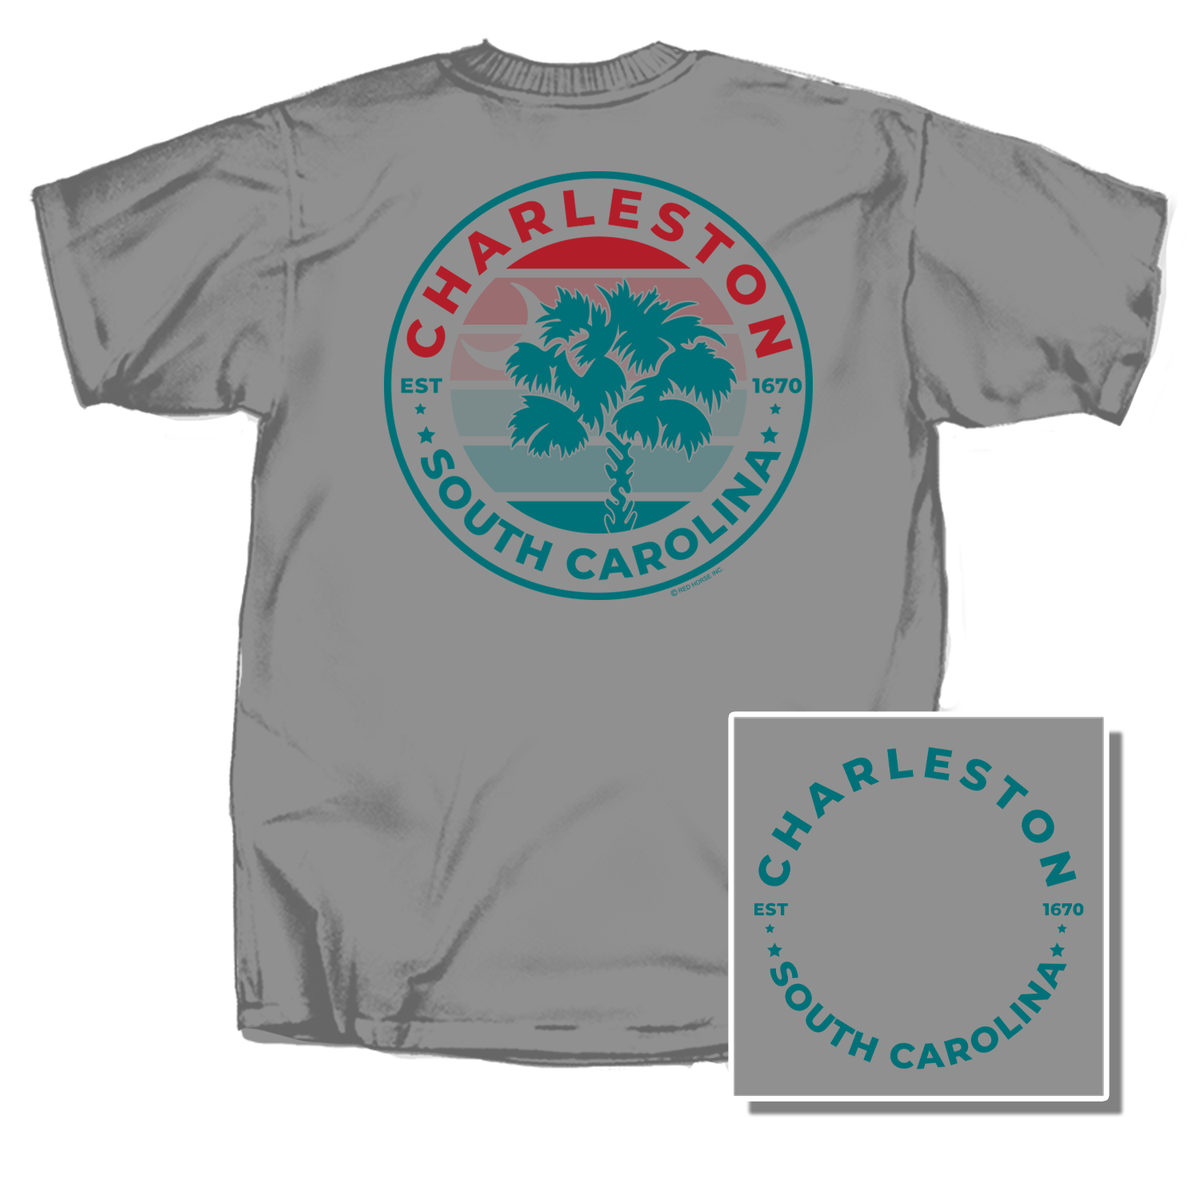 Charleston Coast Short Sleeve T-Shirt in grey